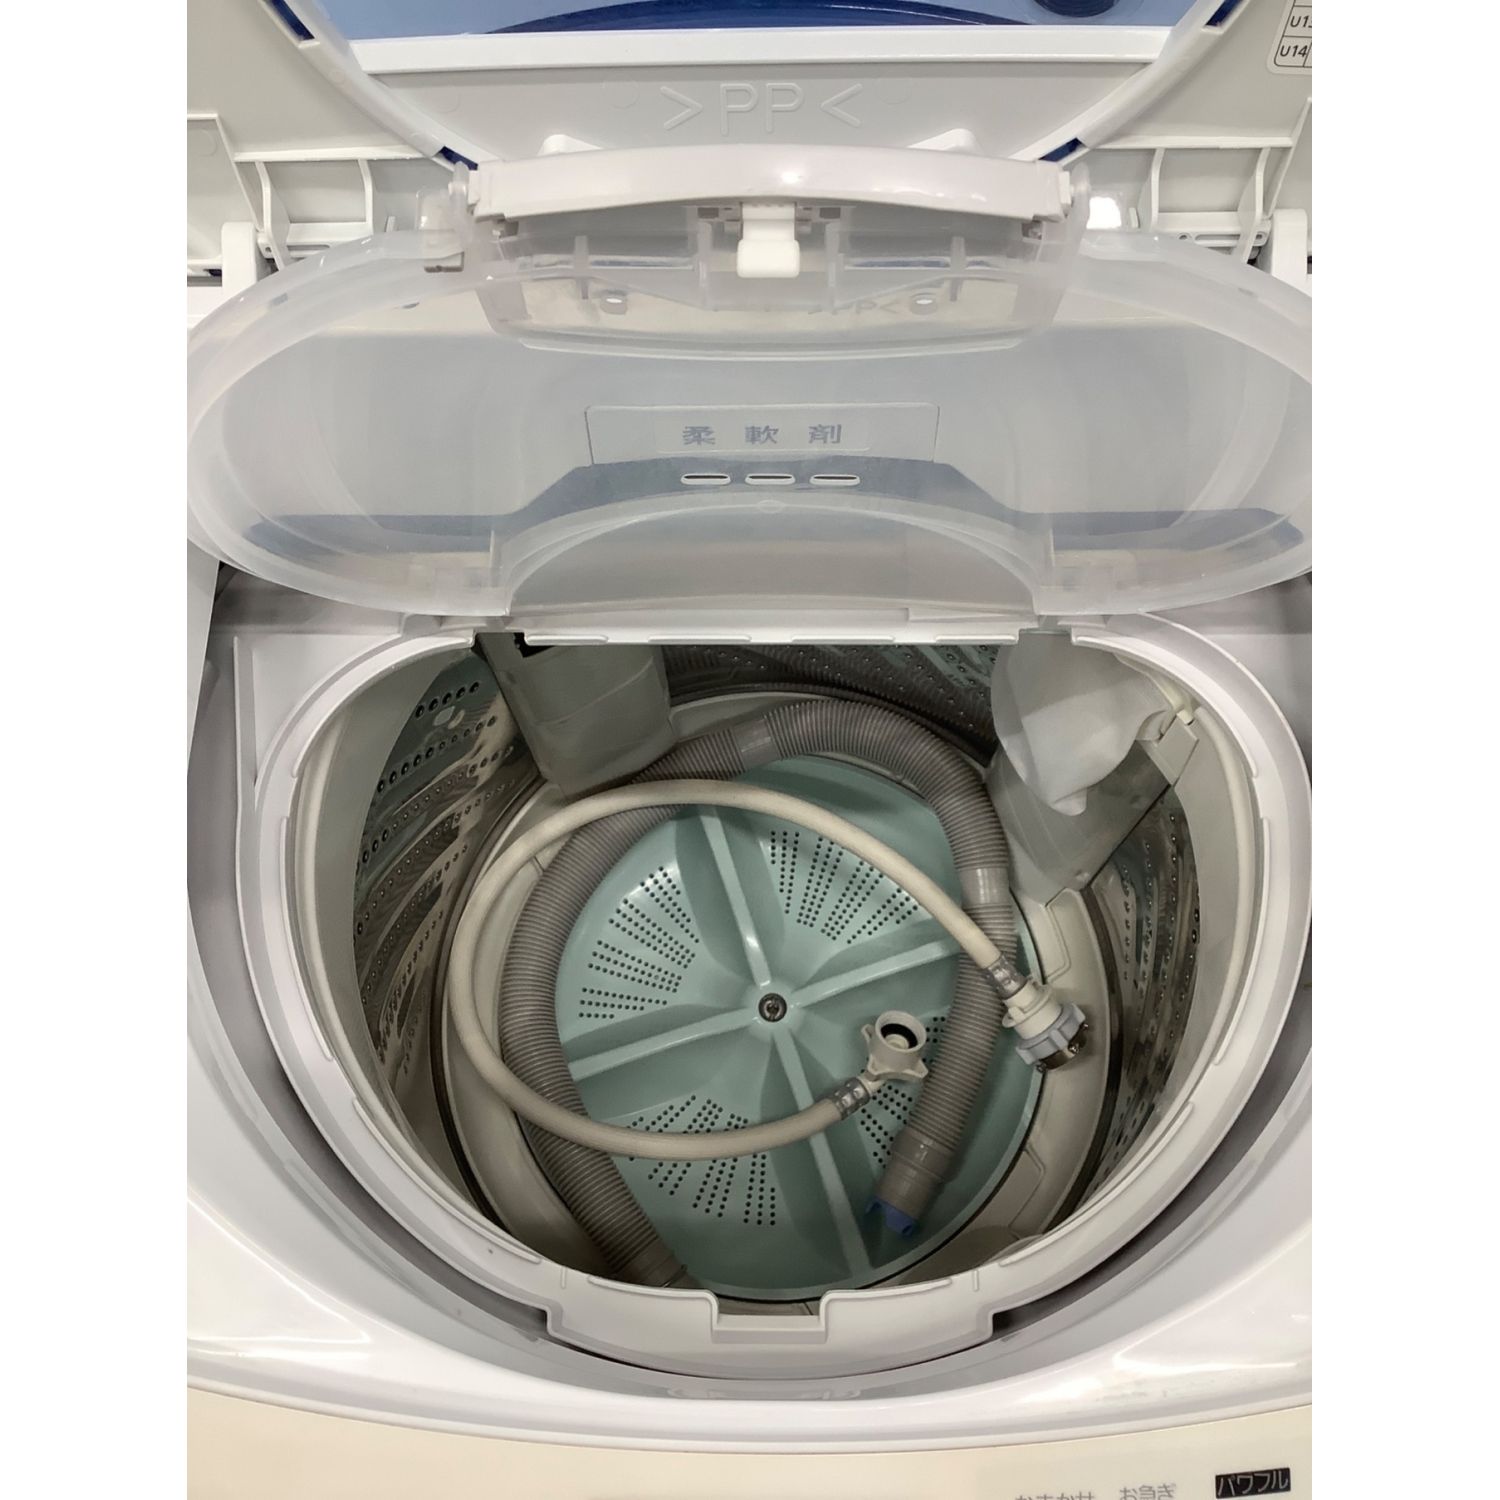 Panasonic (パナソニック) 洗濯機 6.0kg NA-FS60H7 2015年製 50Hz 